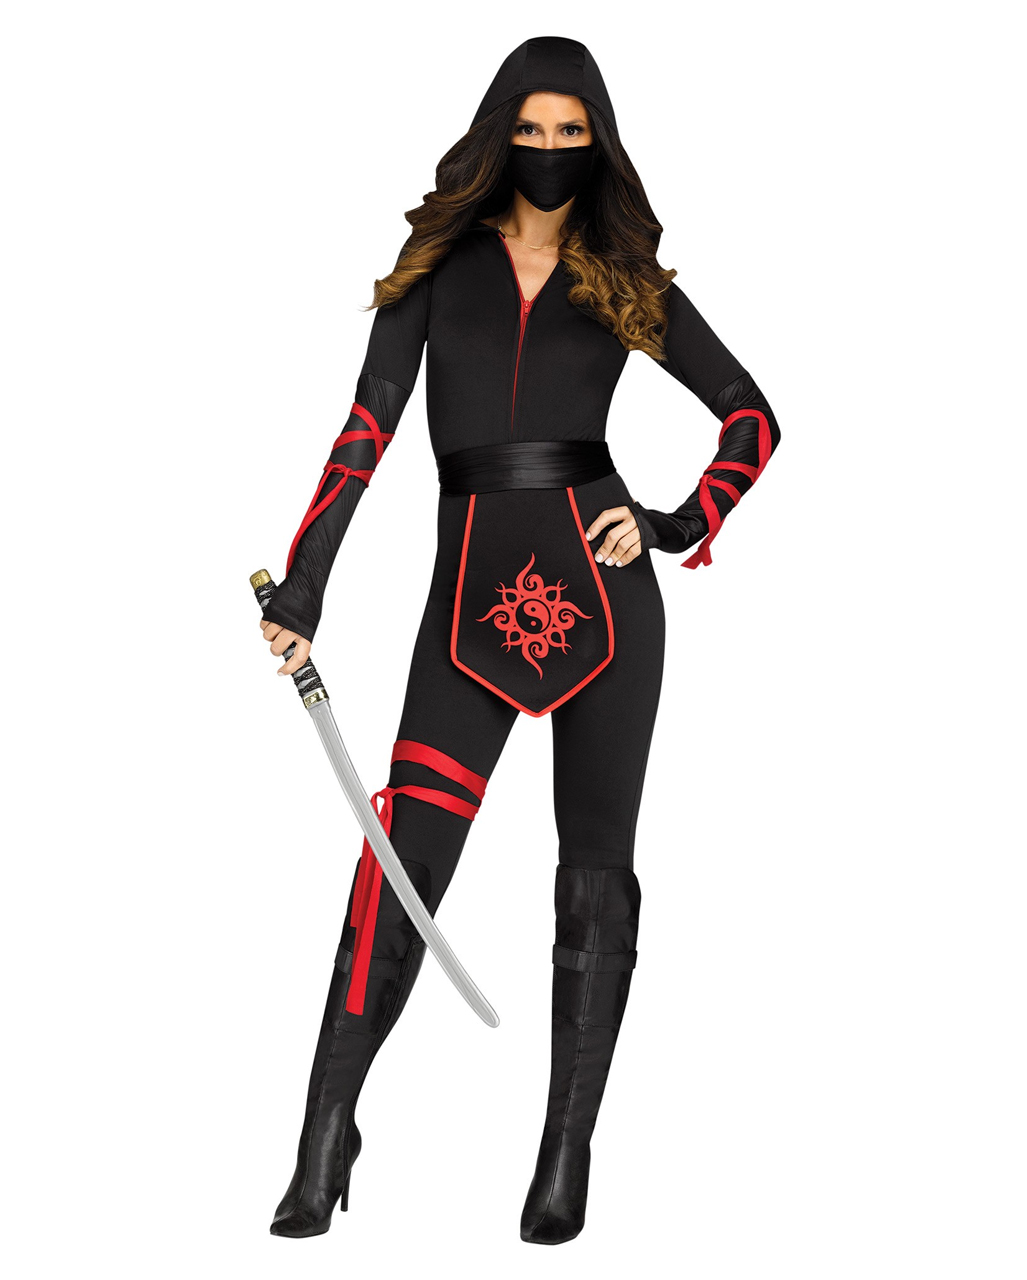 Ninja Warrior Woman Costume for Halloween